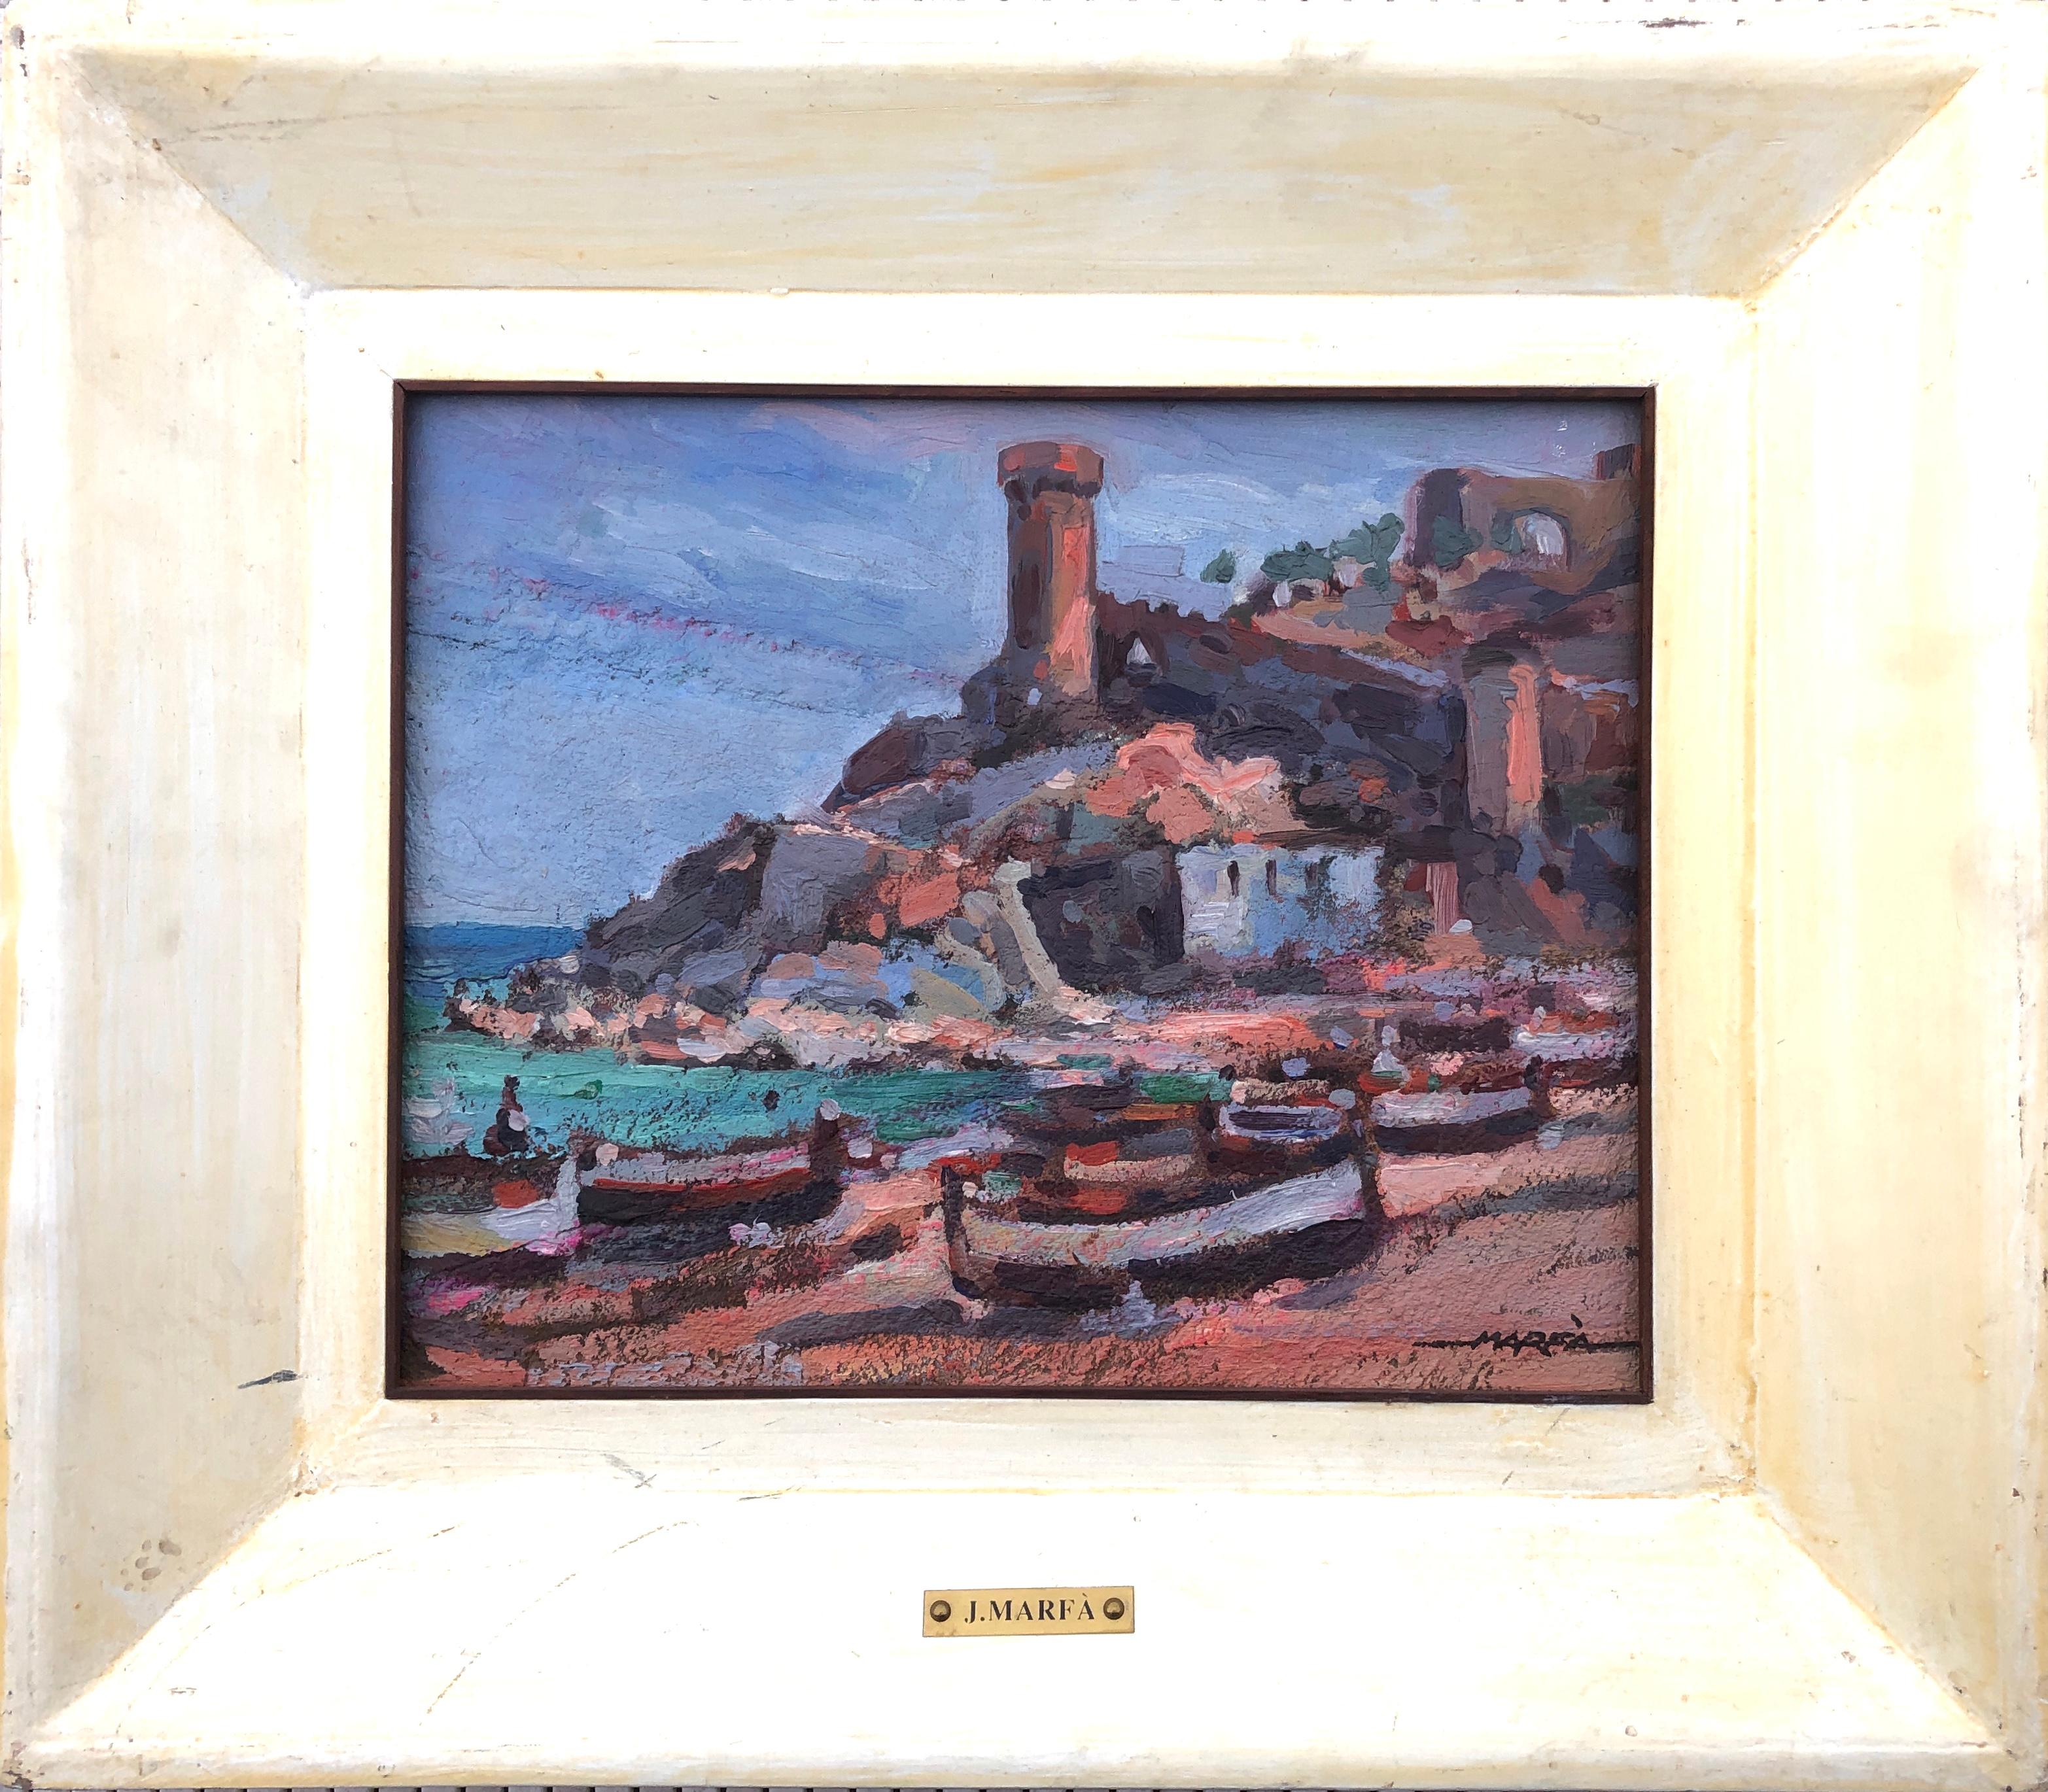 Spanische Meereslandschaft, Original, Öl auf Karton, Gemälde auf Karton, Tossa de Mar, mediterranes Gemälde – Painting von Josep Marfa Guarro